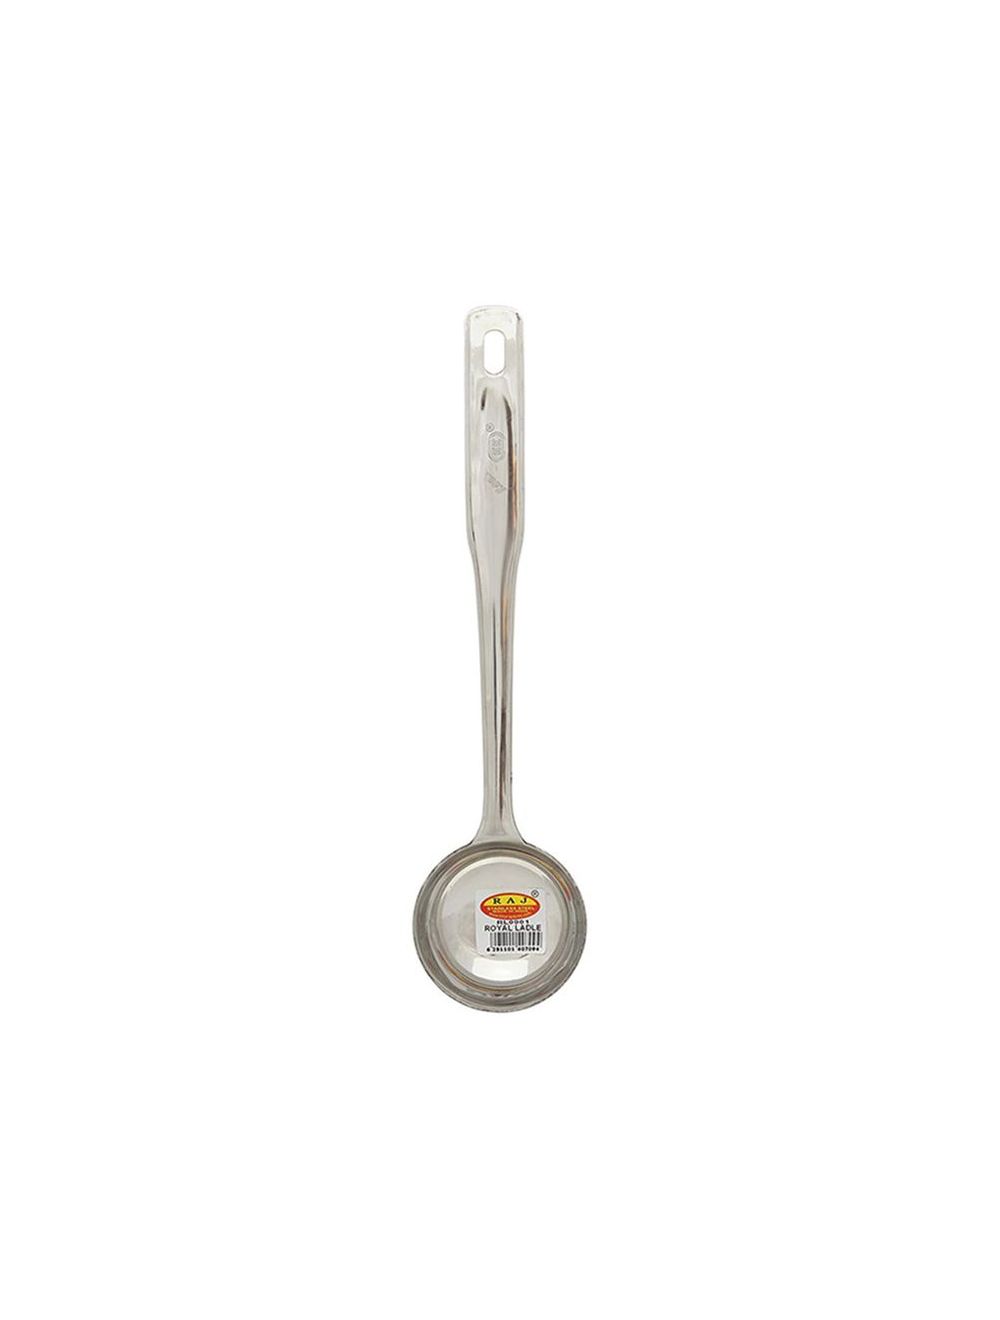 Raj 7.5cm Stainless Steel Royal Laddle Spoon, RL0001, Silver